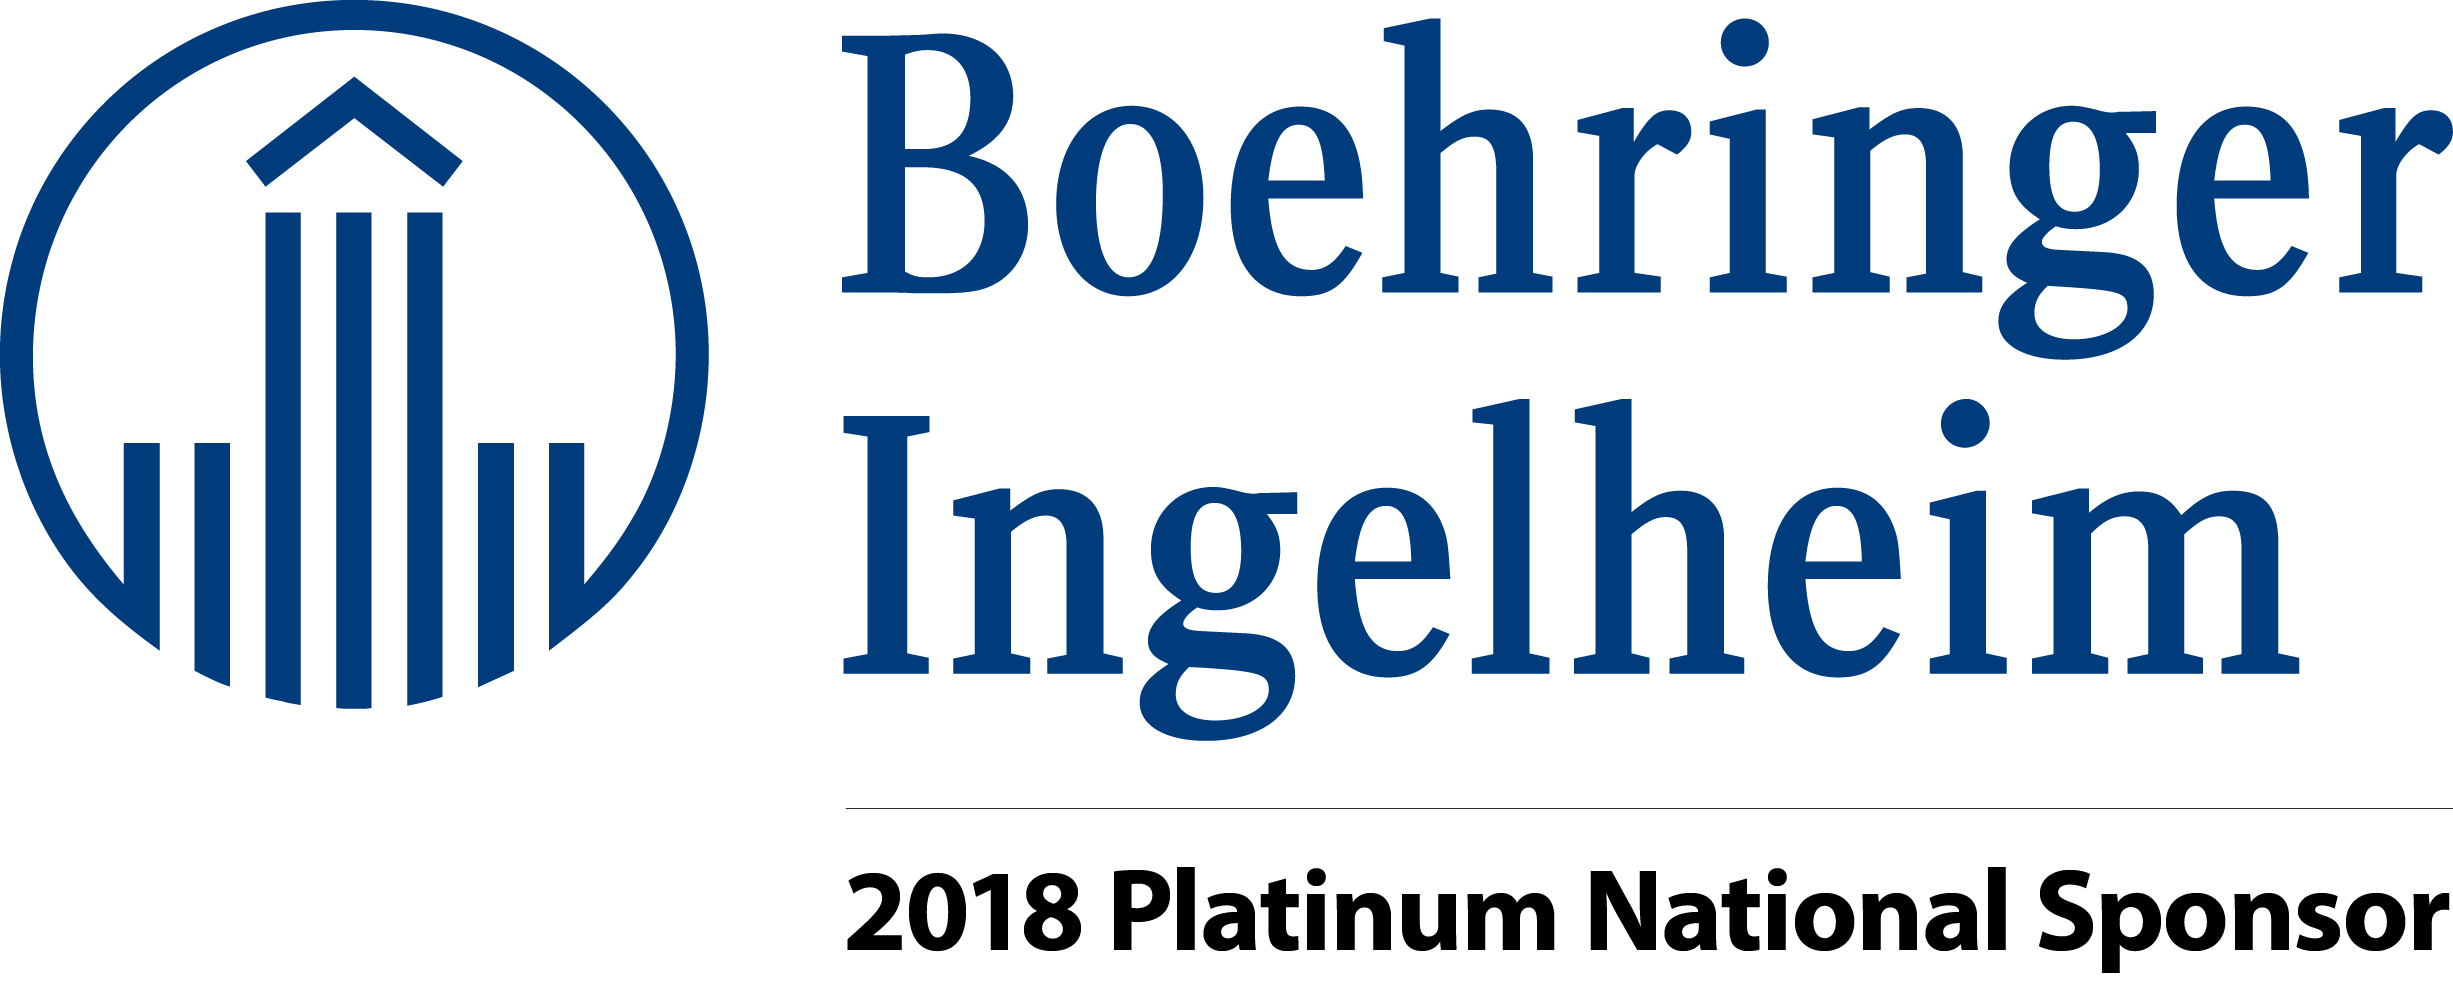 Boehringer Ingelheim 2018 Platinum National Sponsor